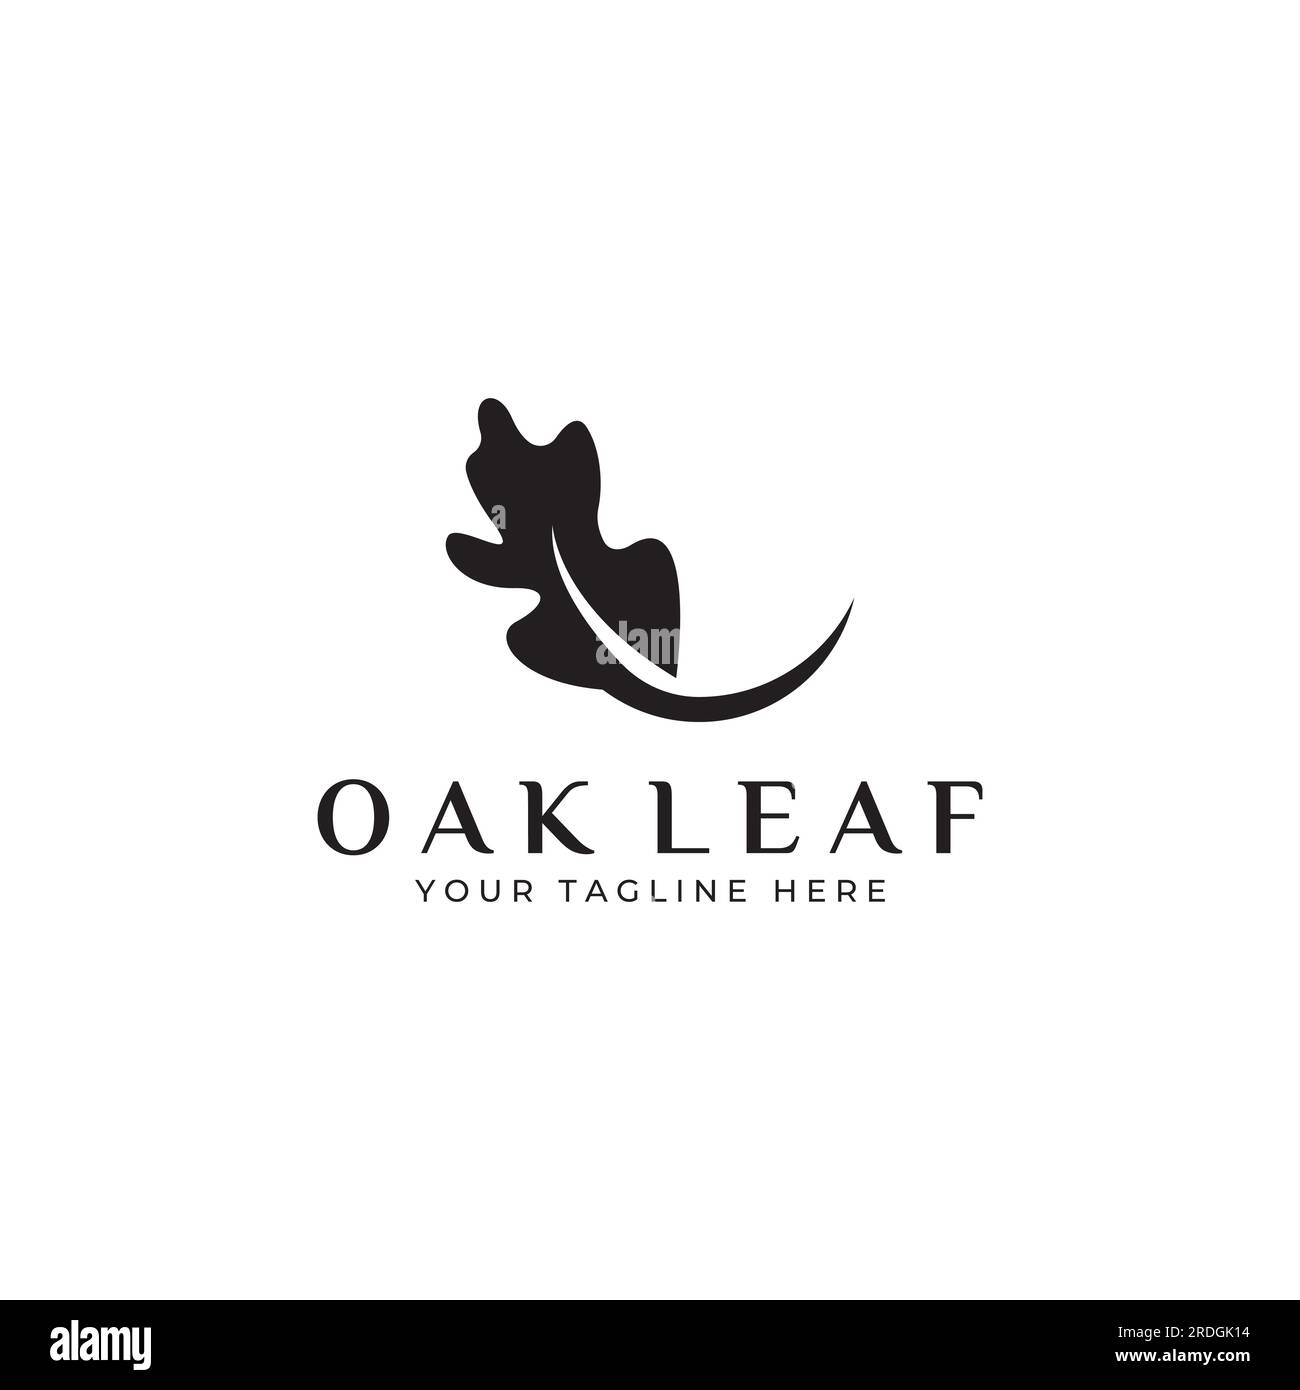 Autumn oak leaf logo and oak tree logo. With editing vector illustration. Stock Vector